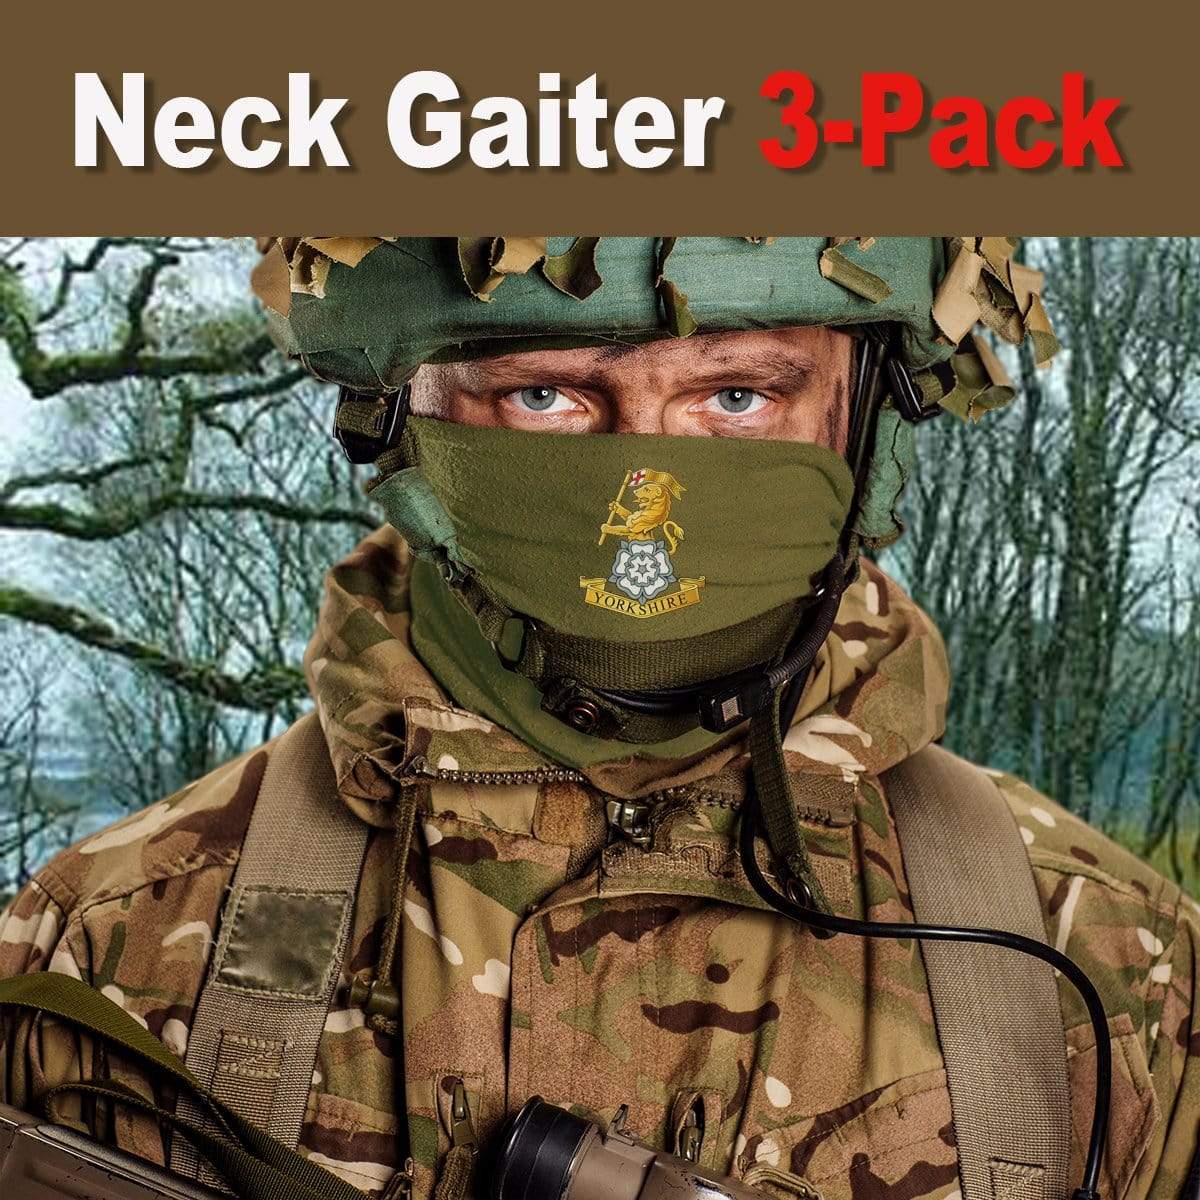 neck gaiter Bandana 3-Pack - Yorkshire Regiment Neck Gaiter 3-Pack Yorkshire Regiment Neck Gaiter/Headover 3-Pack